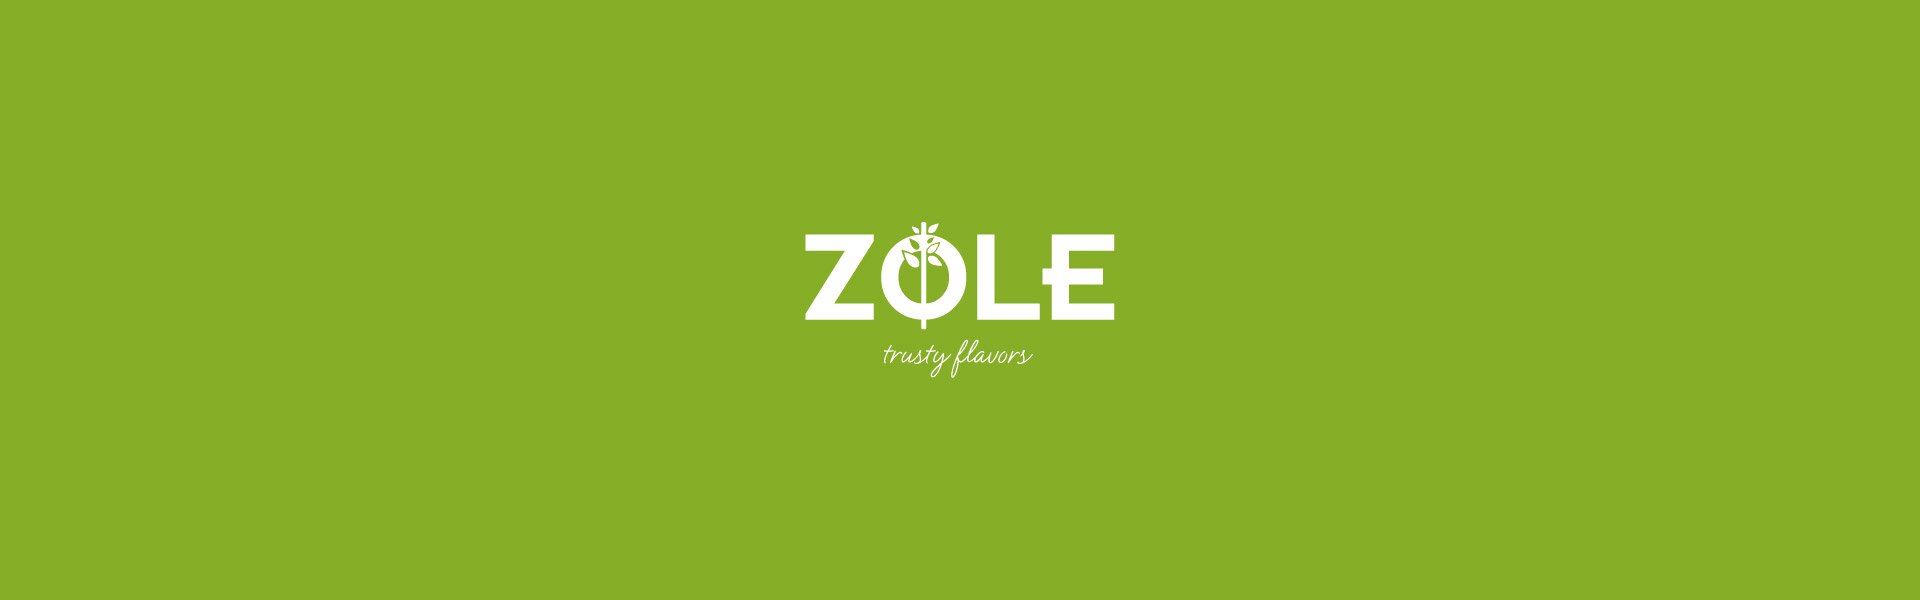 Logos-Instudio-Zole